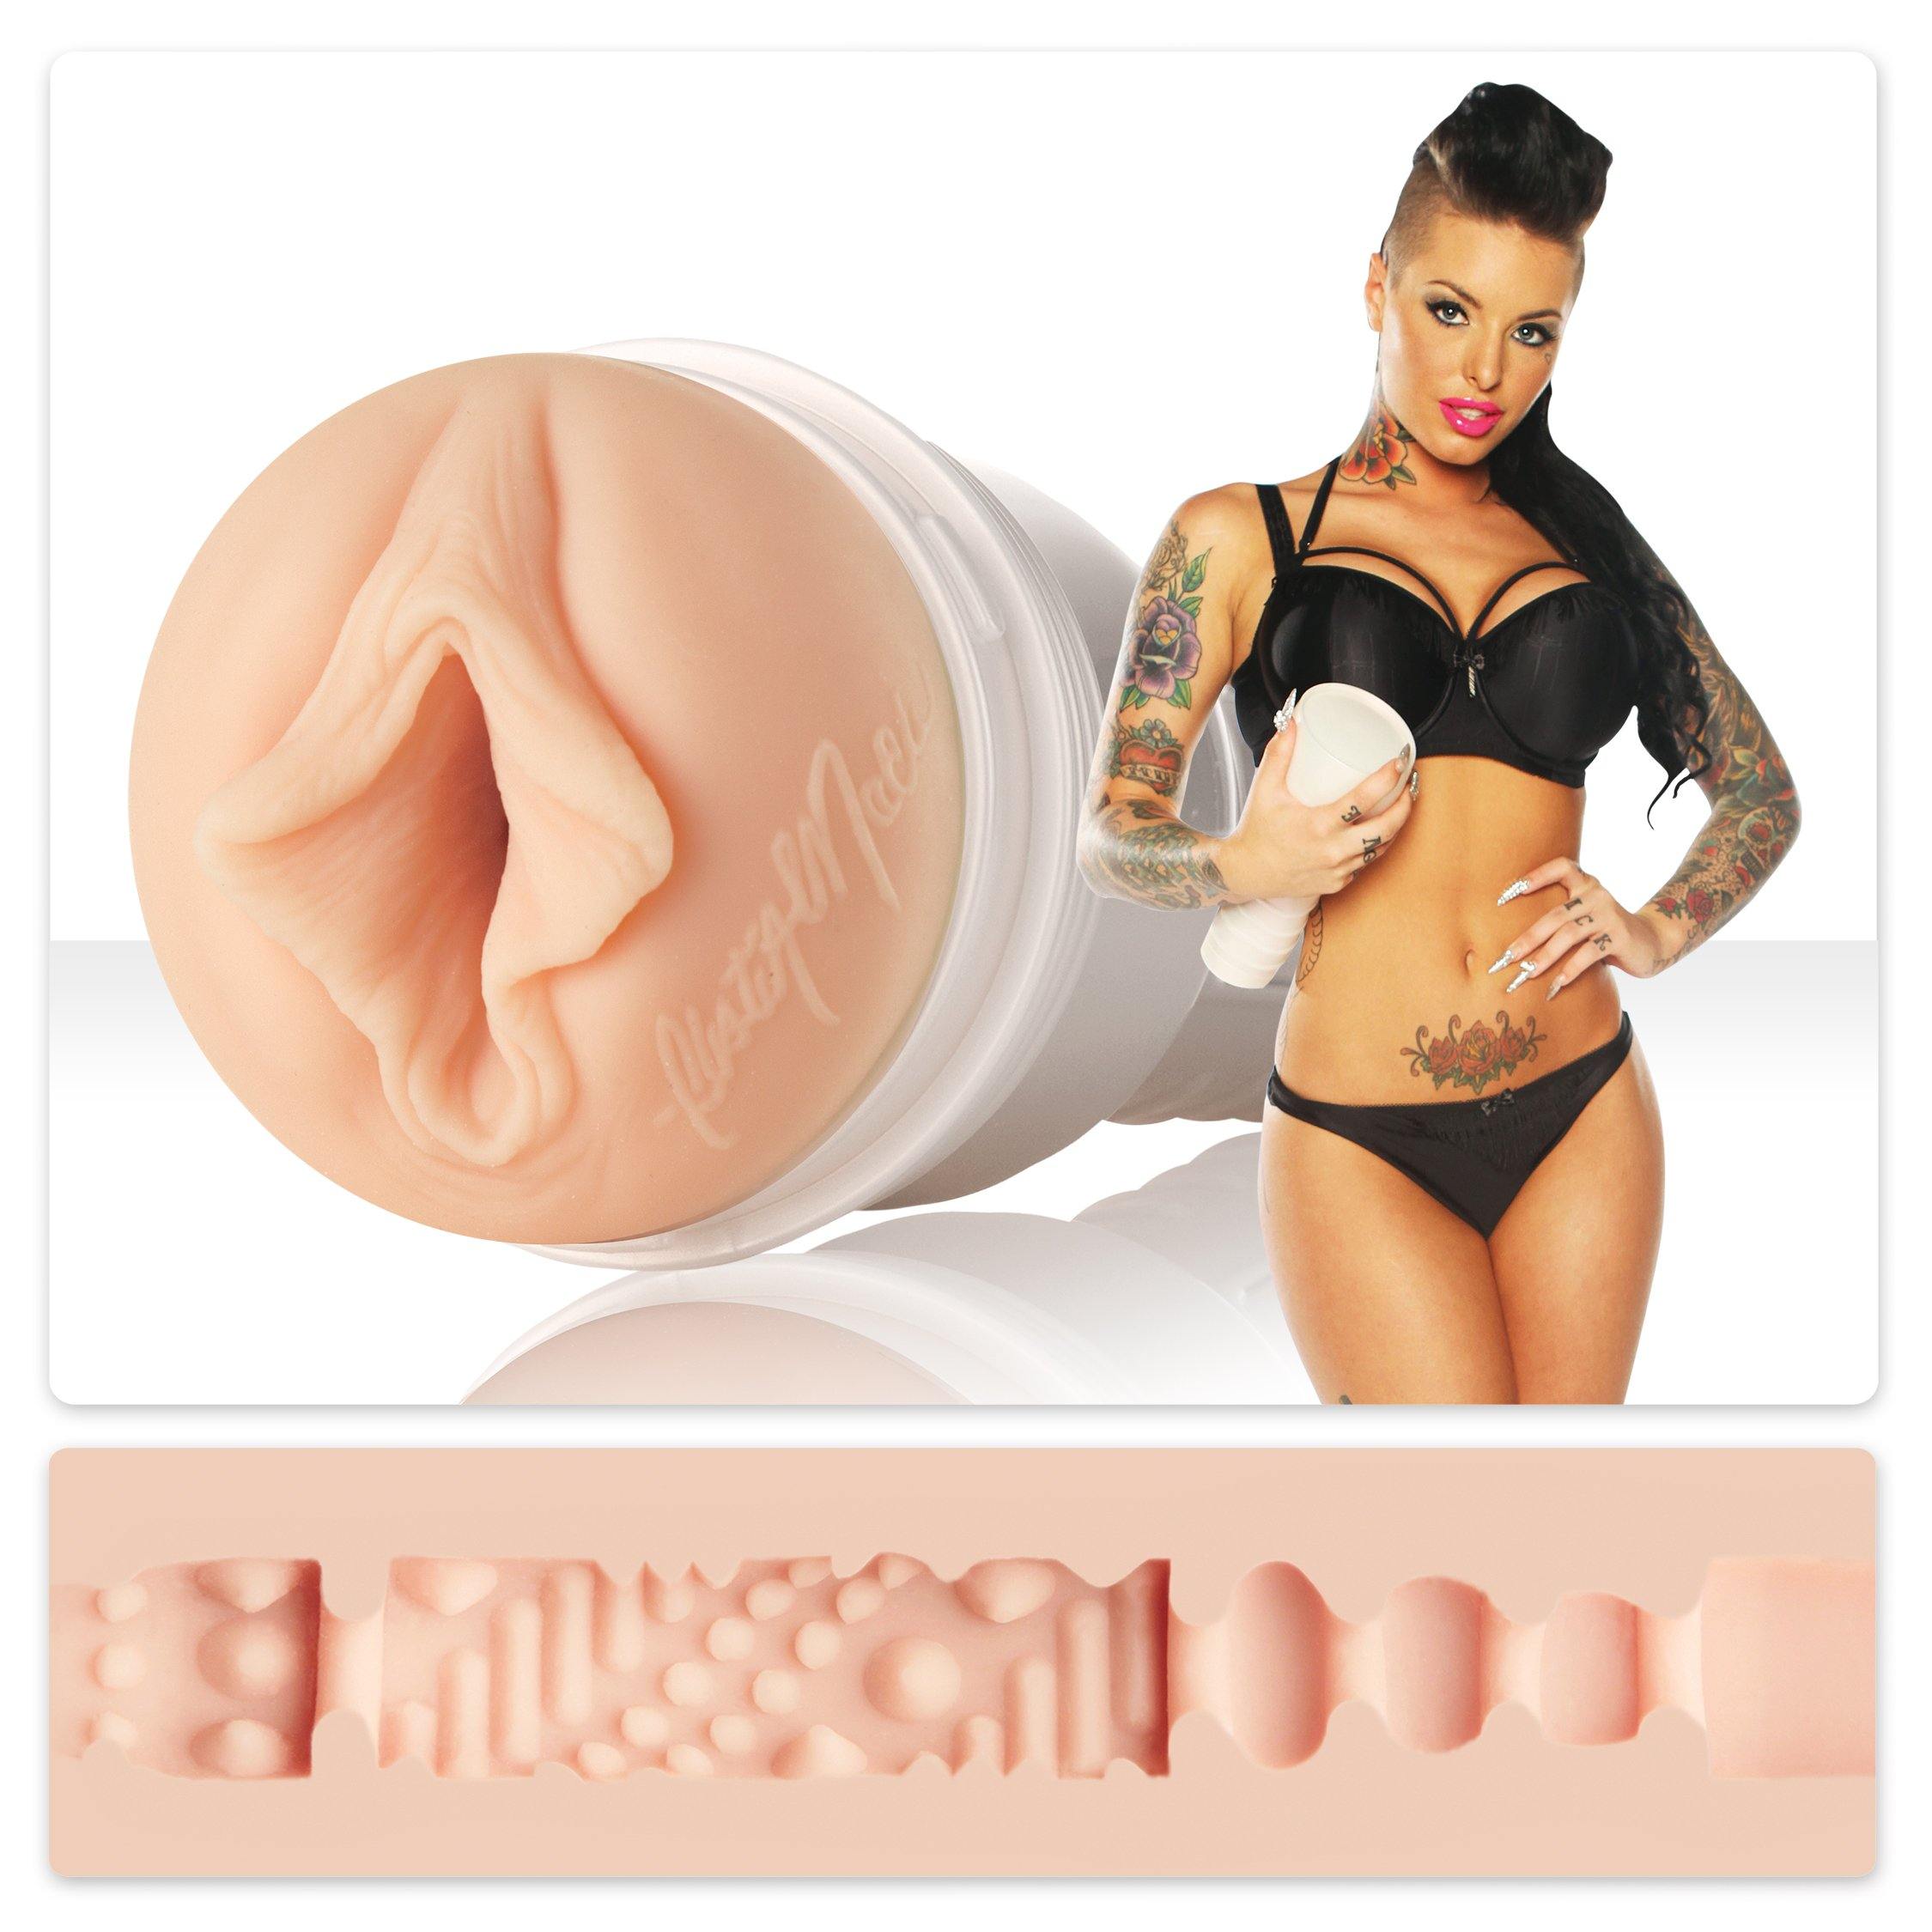 Fleshlight Girls Christy Mack Attack - Buy At Luxury Toy X - Free 3-Day Shipping